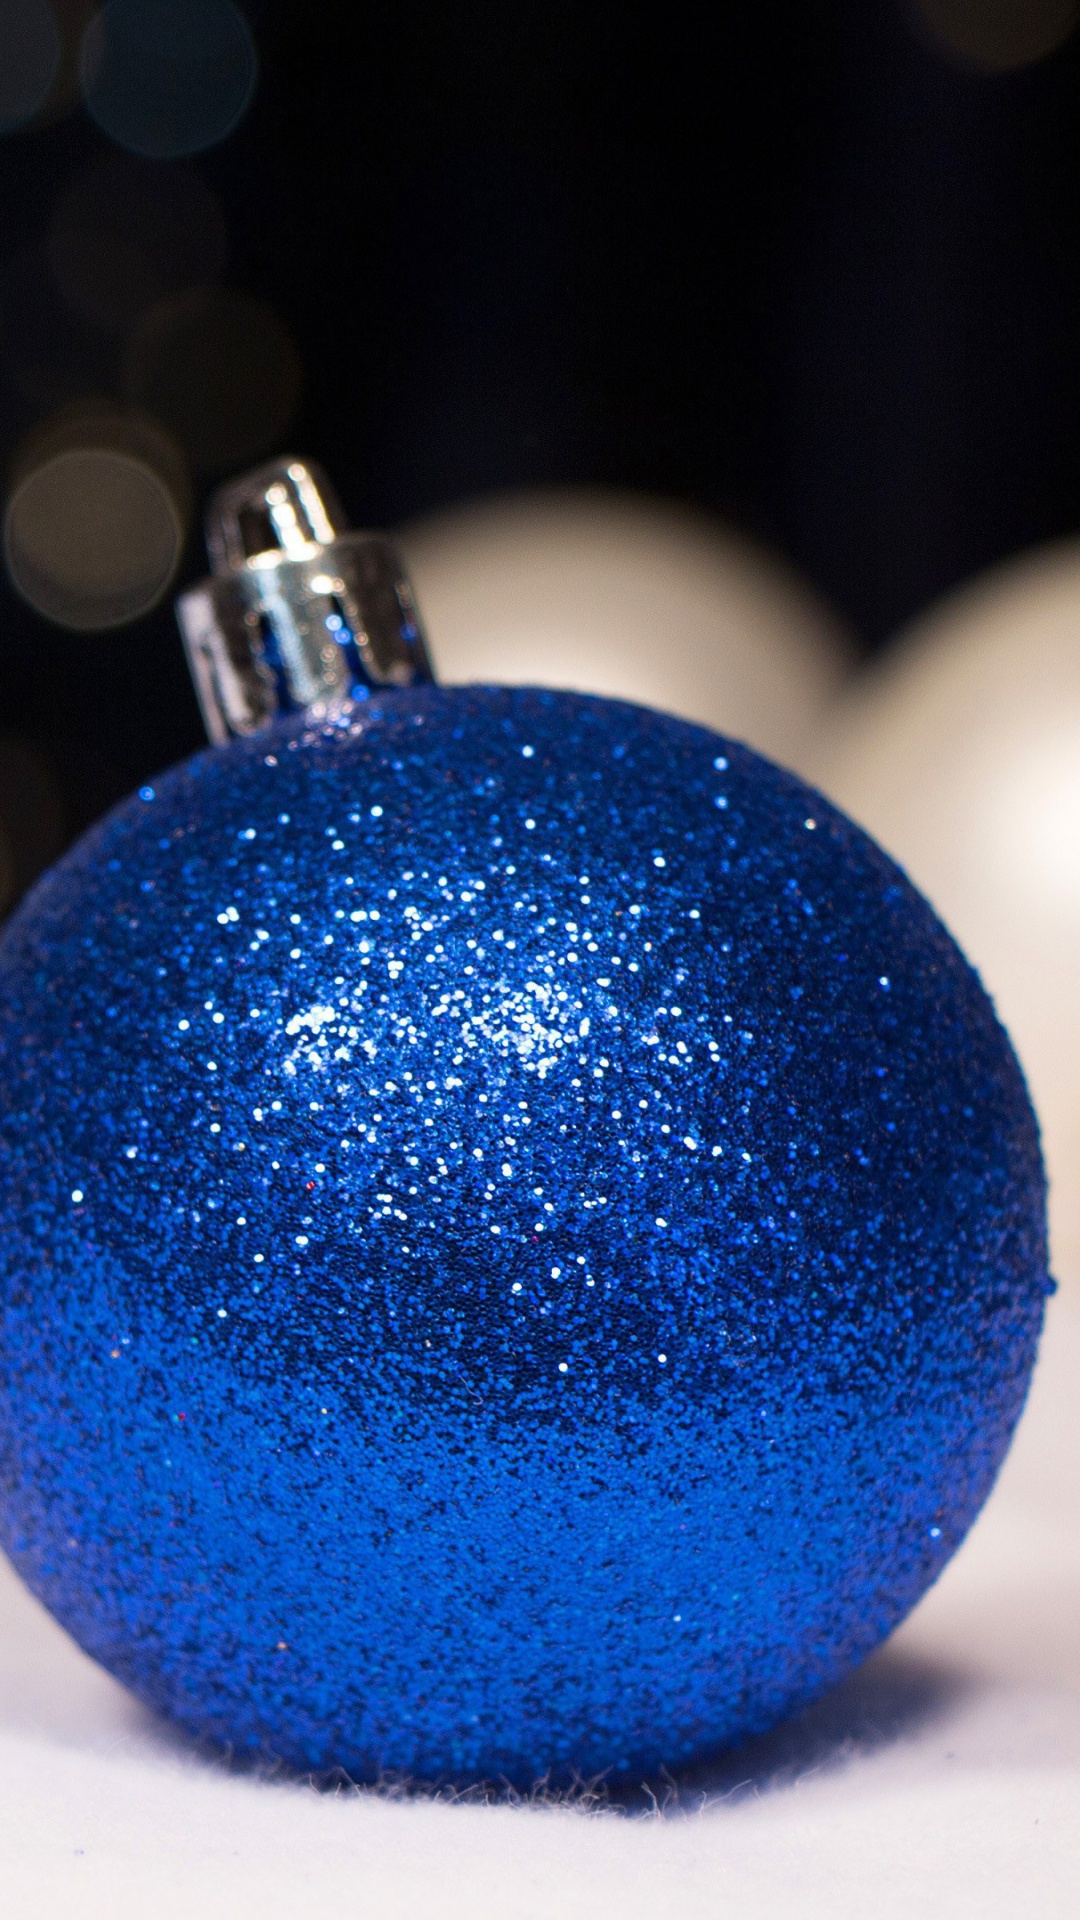 Blue Sparkly Ornament wallpaper 1080x1920